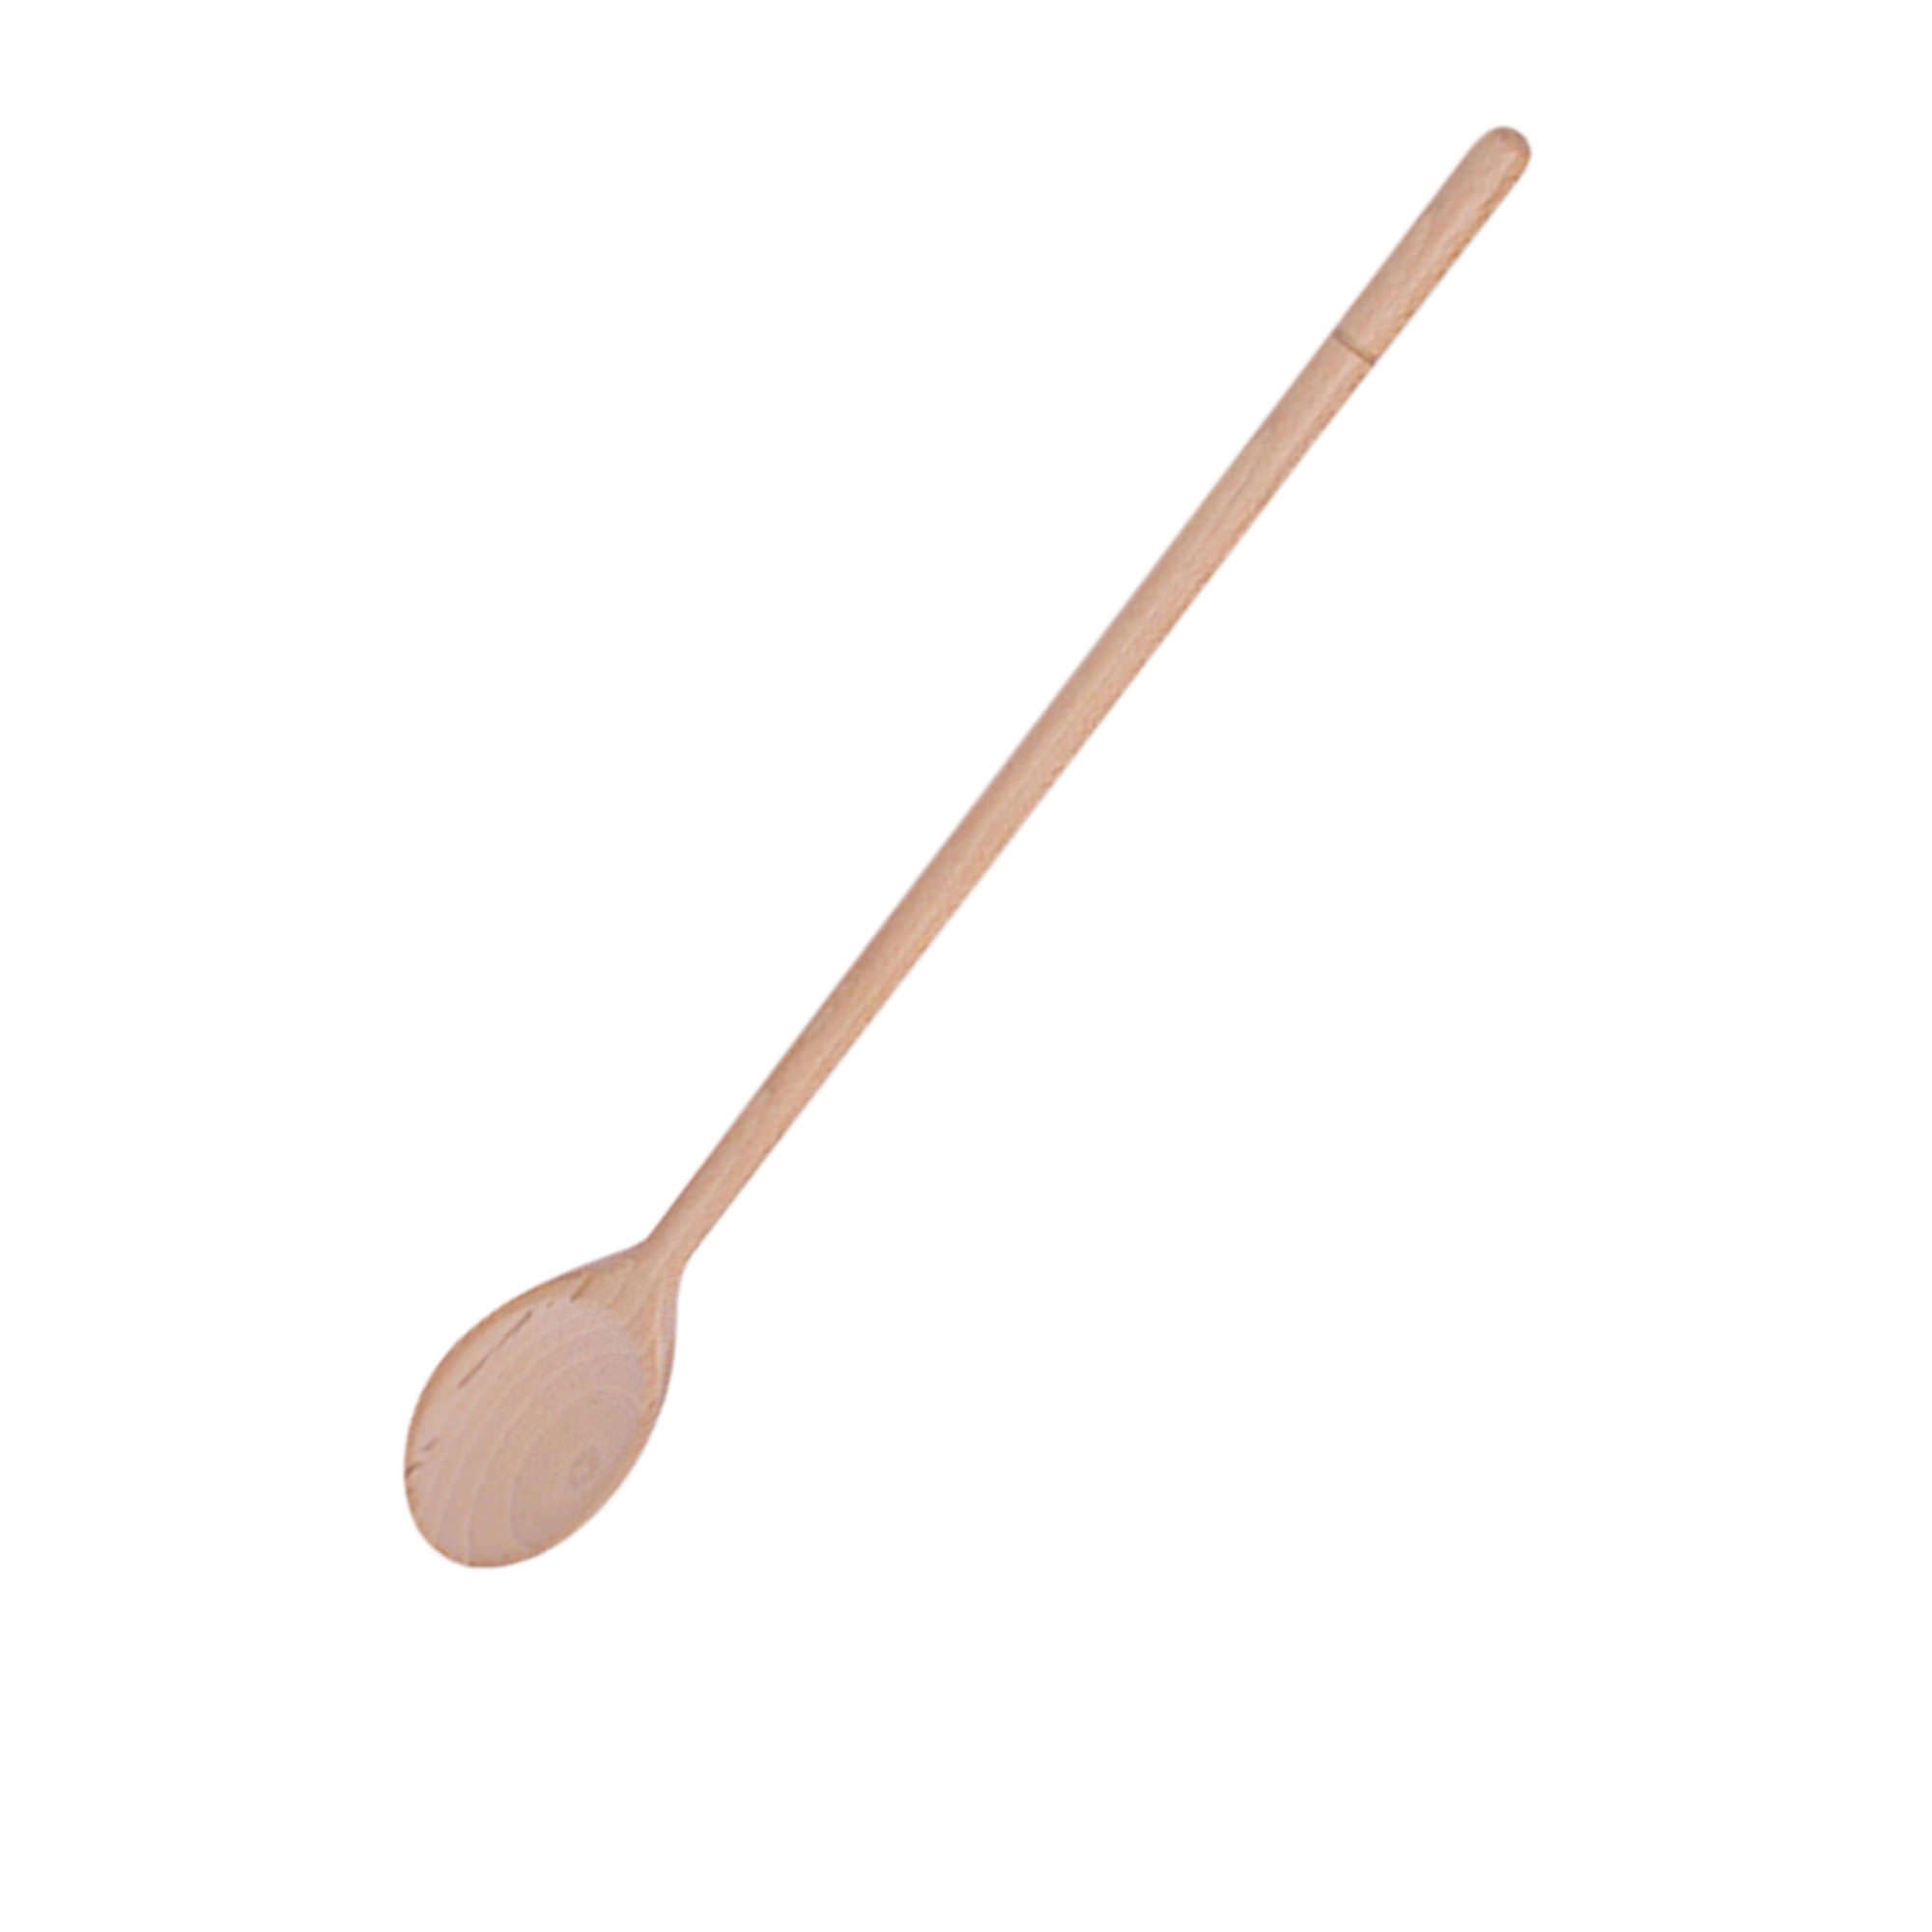 Mondo Wooden Spoon 30cm Image 1